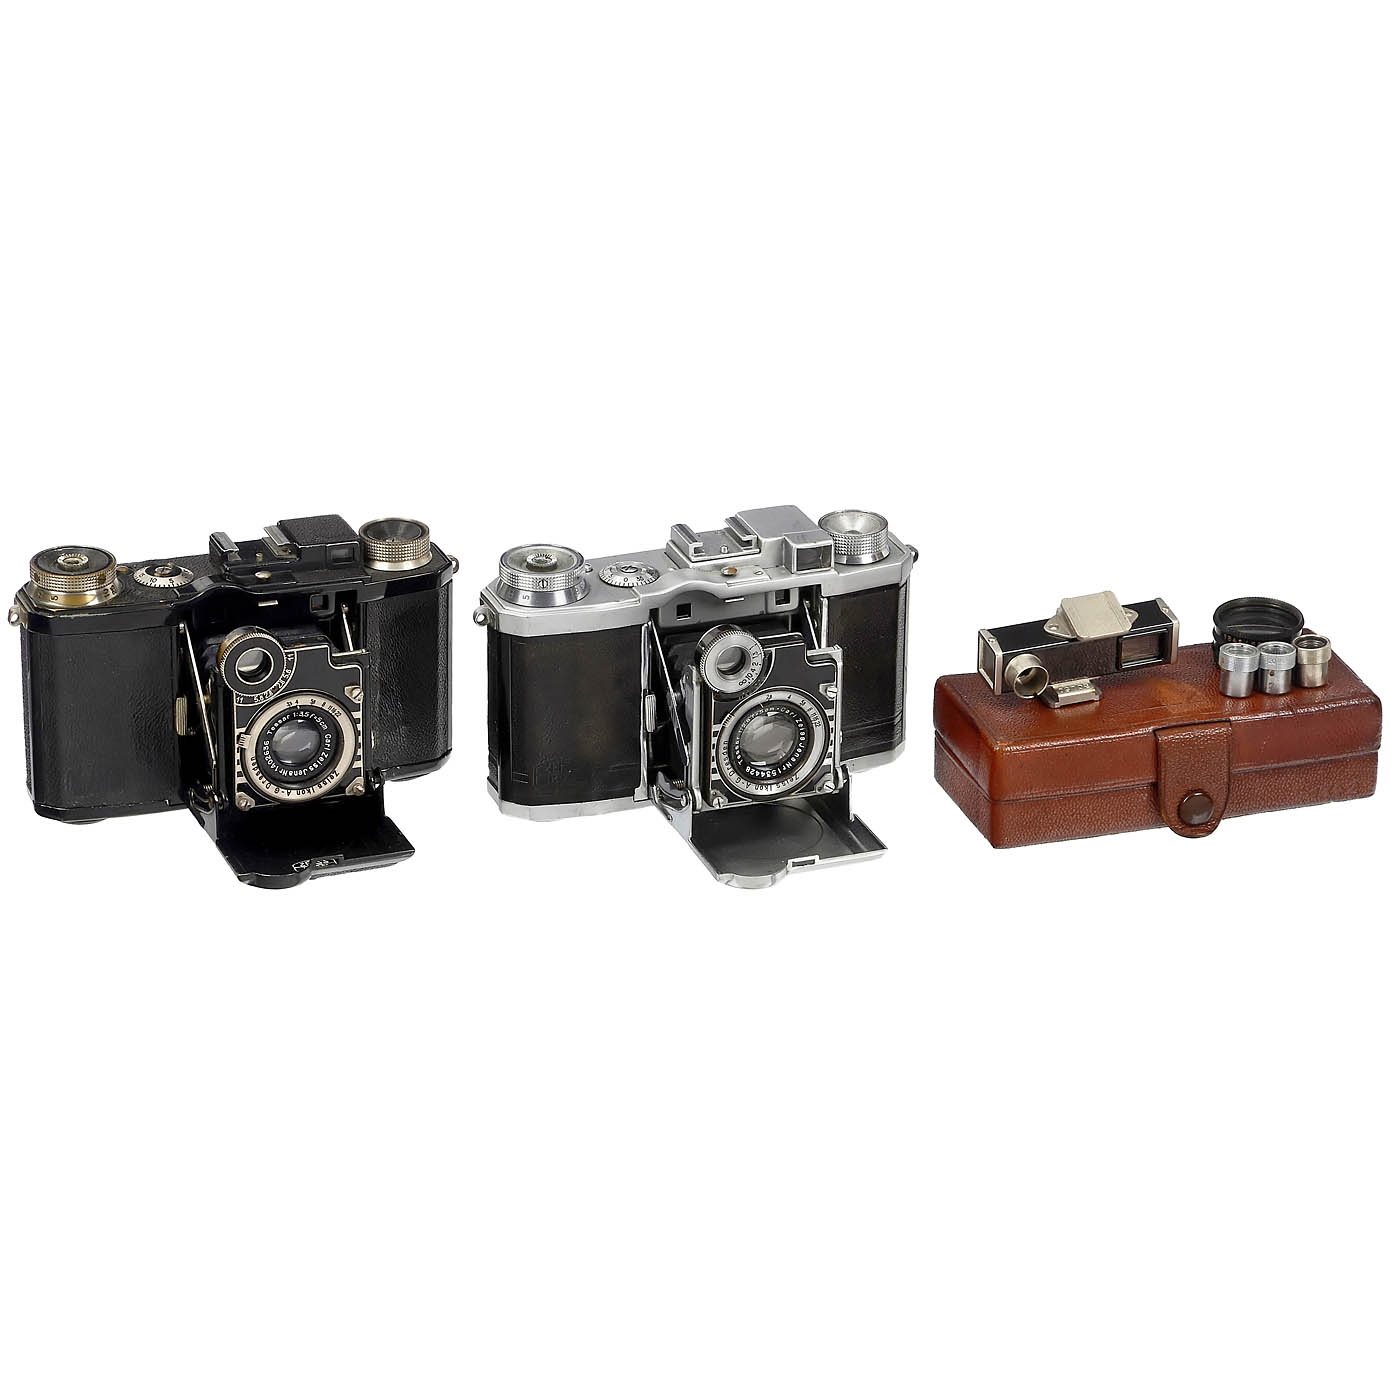 Super Nettel II and Super Nettel Cameras, c. 1936